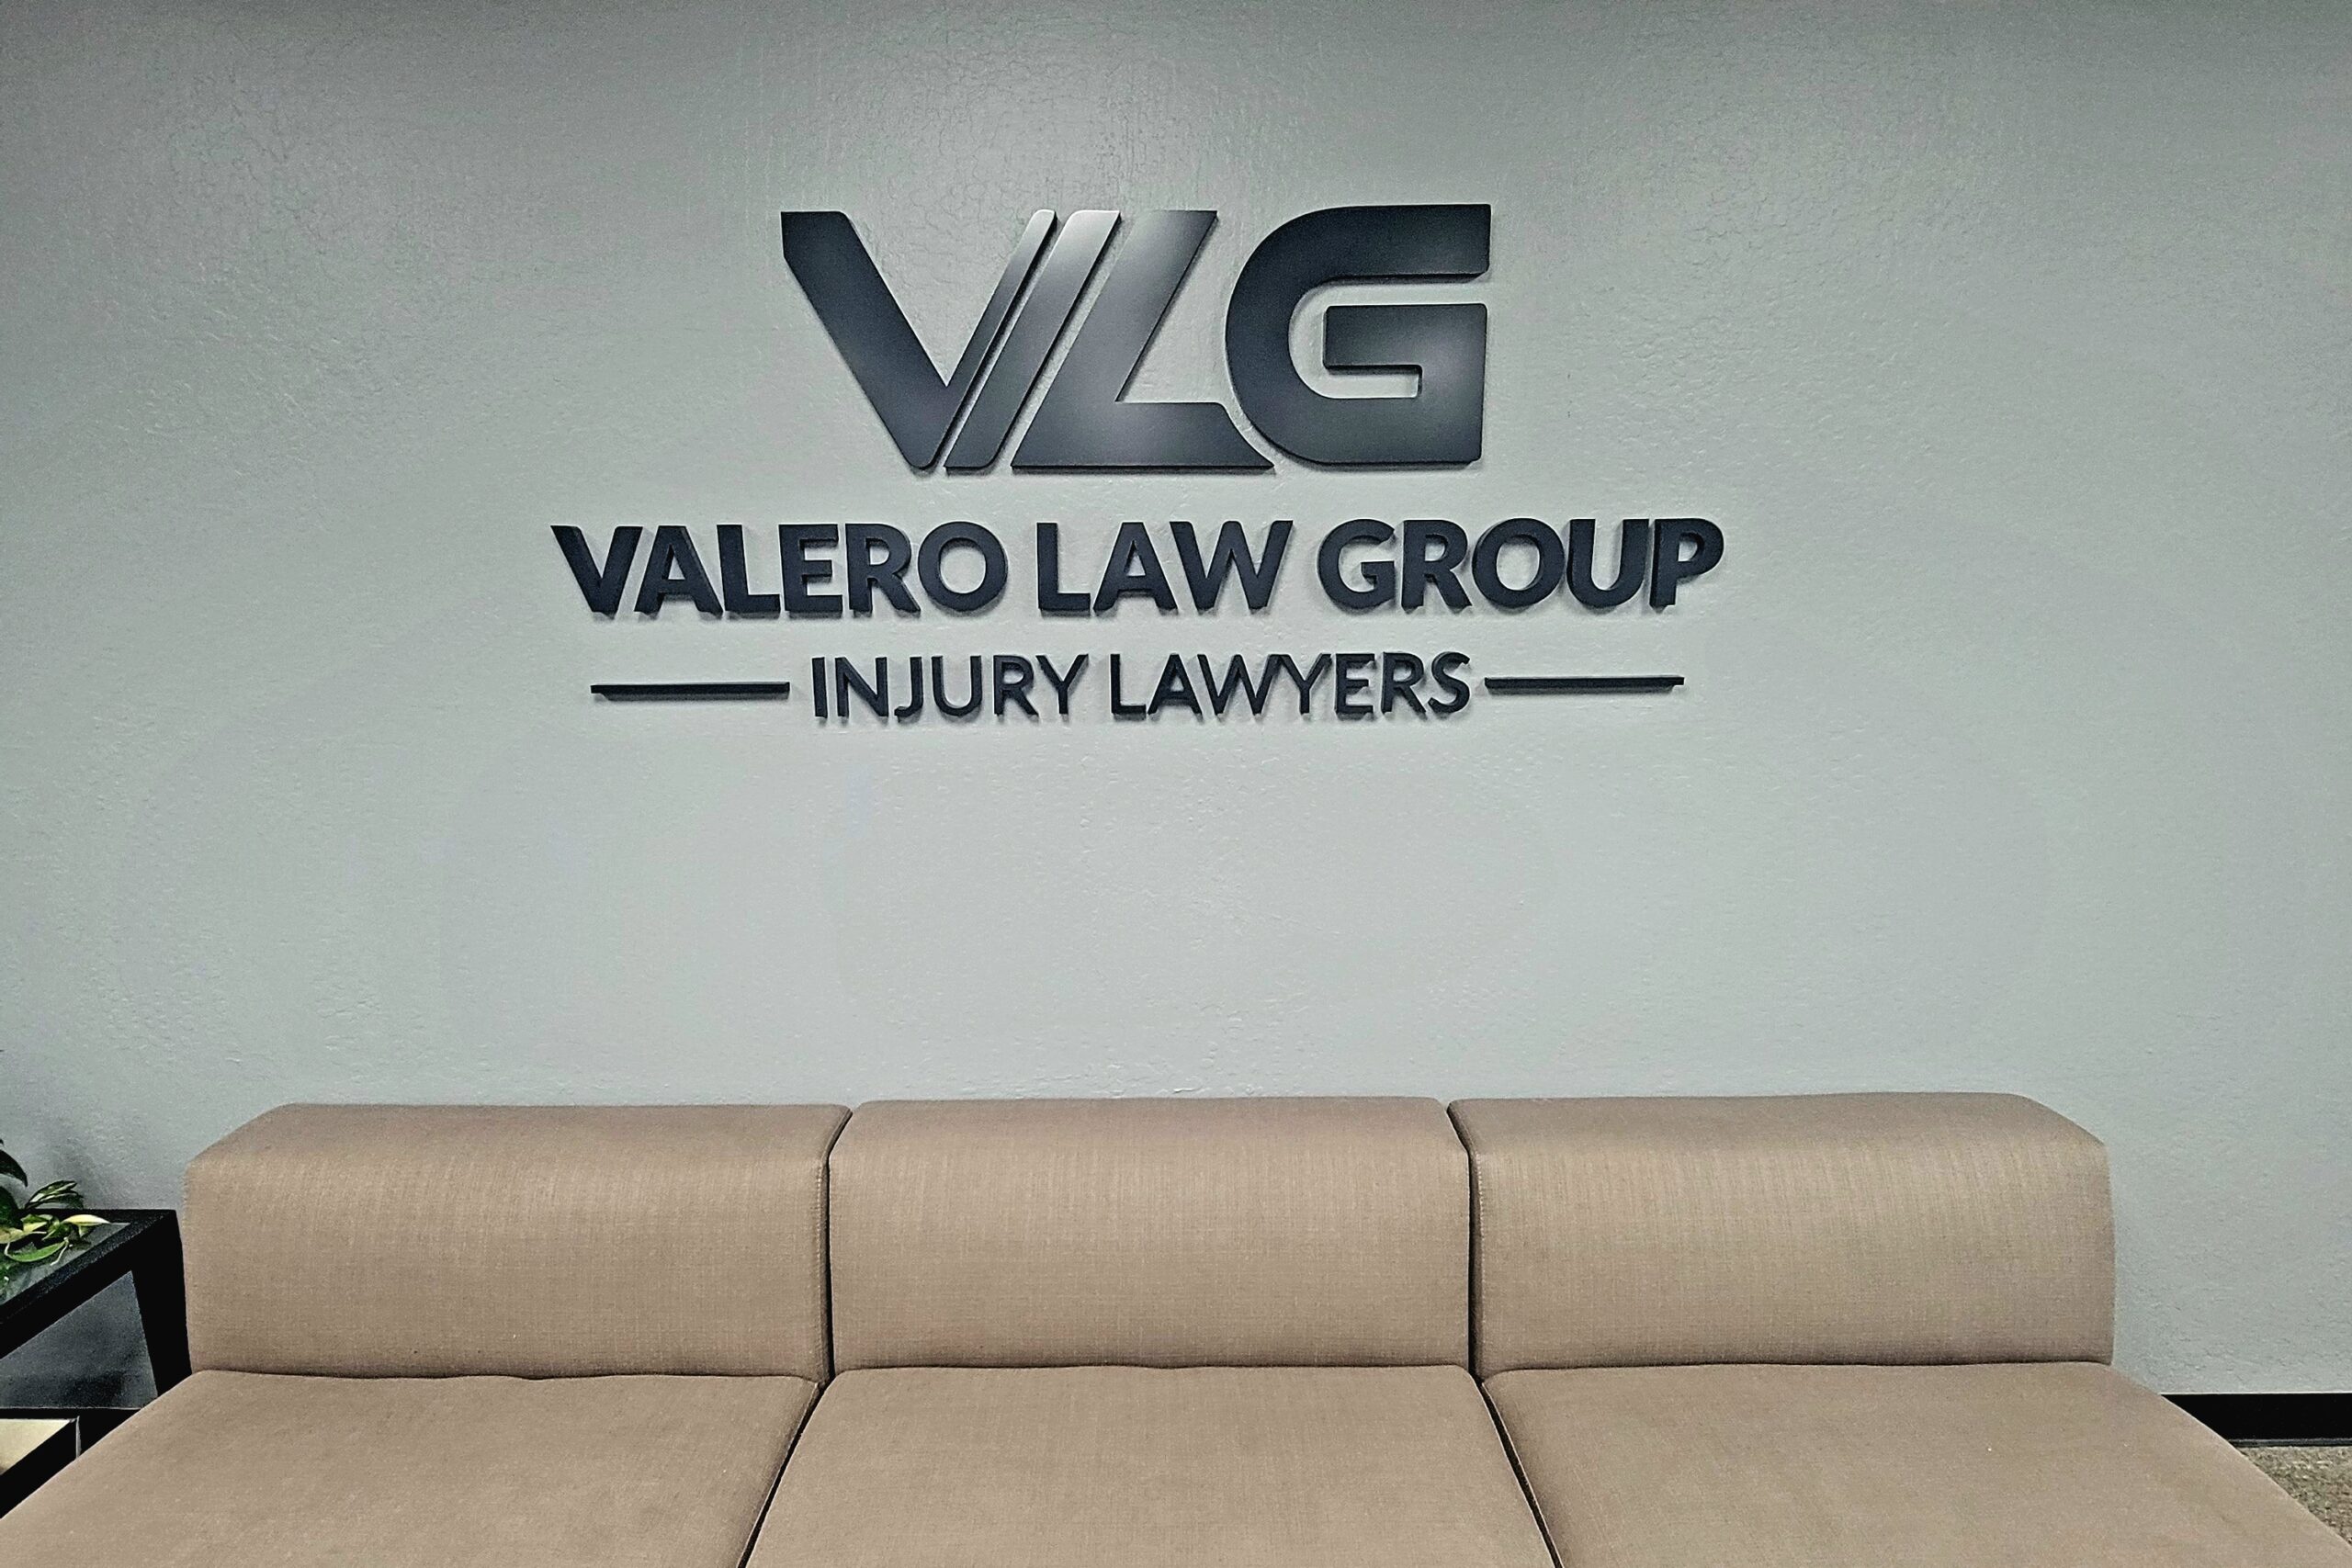 Custom lobby sign for Valero Law Group in San Jose